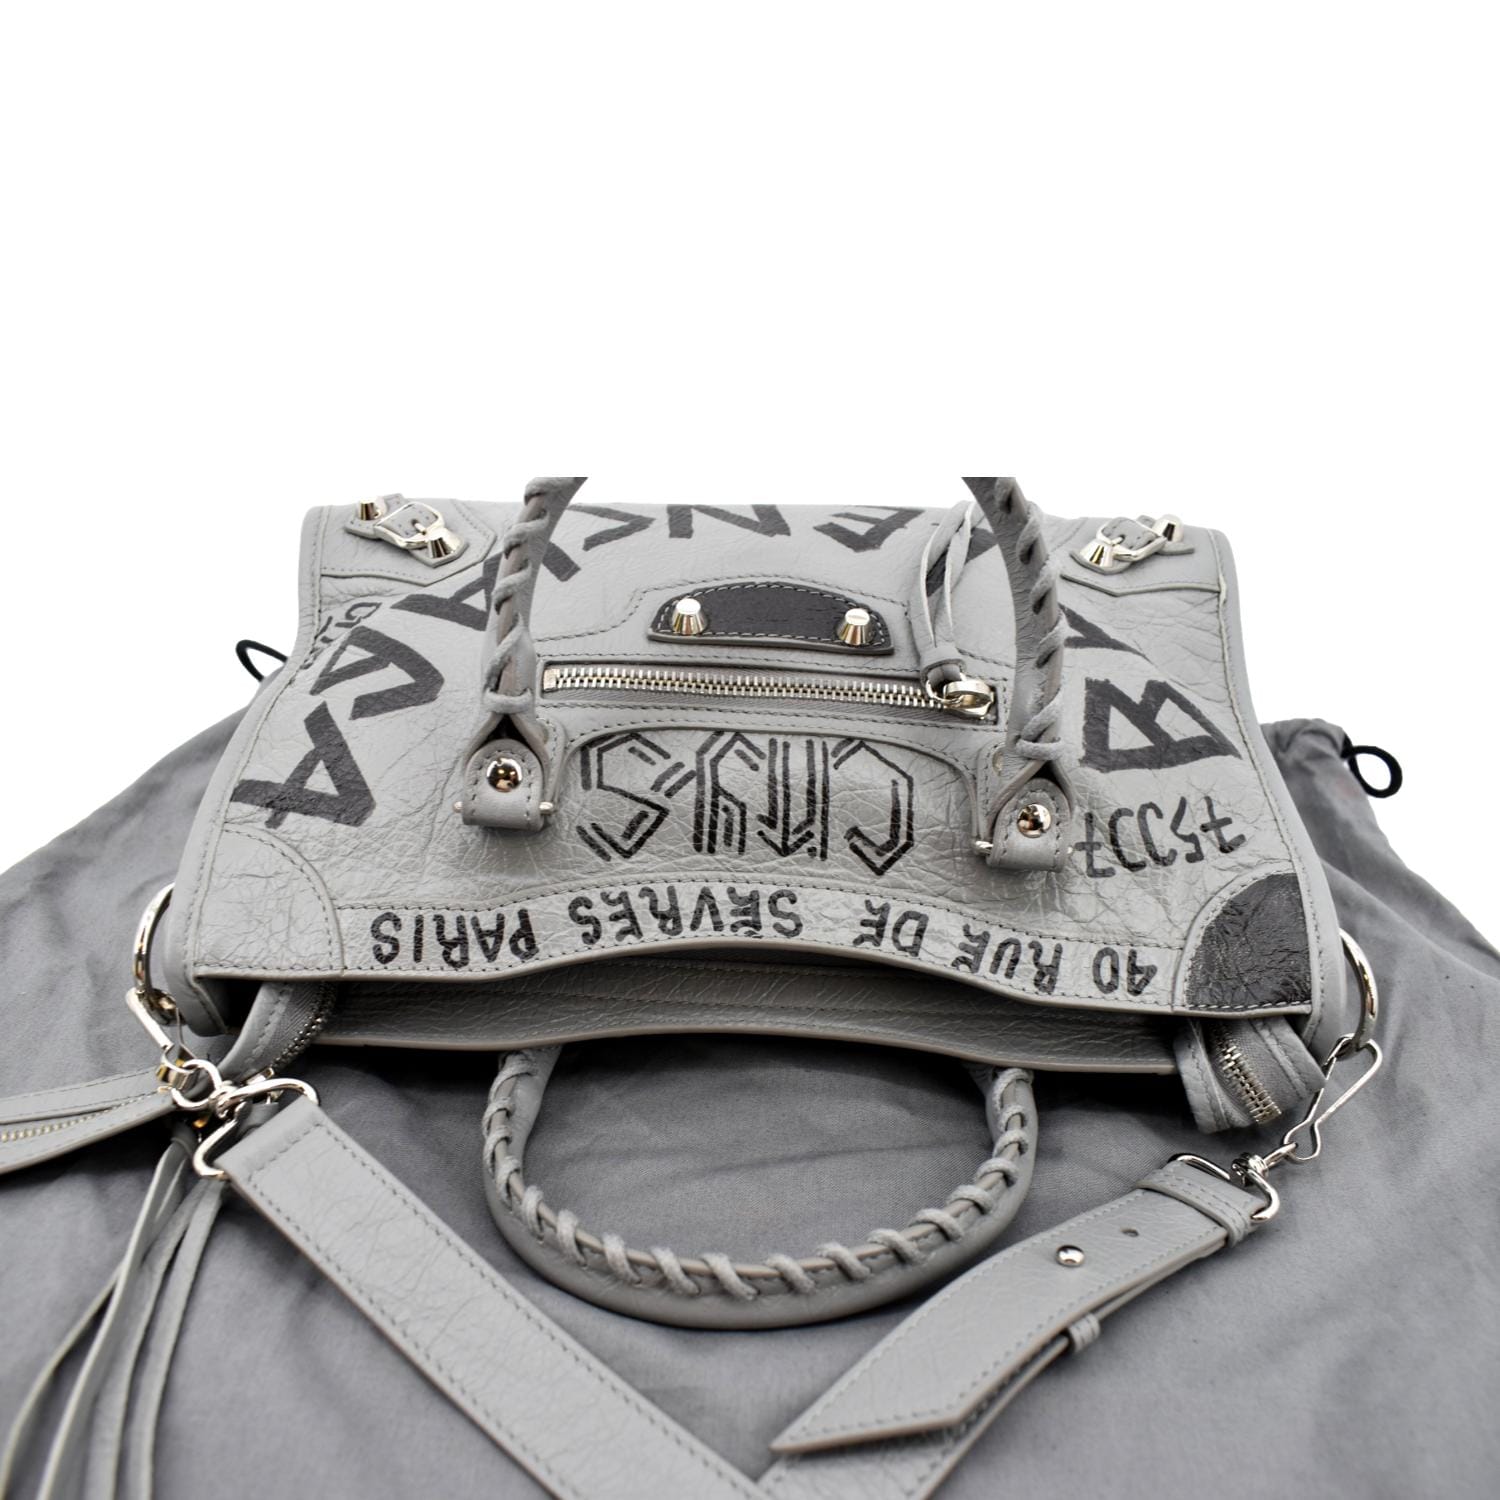 Sold at Auction: Balenciaga Leather Graffiti Shoulder Bag, Spring